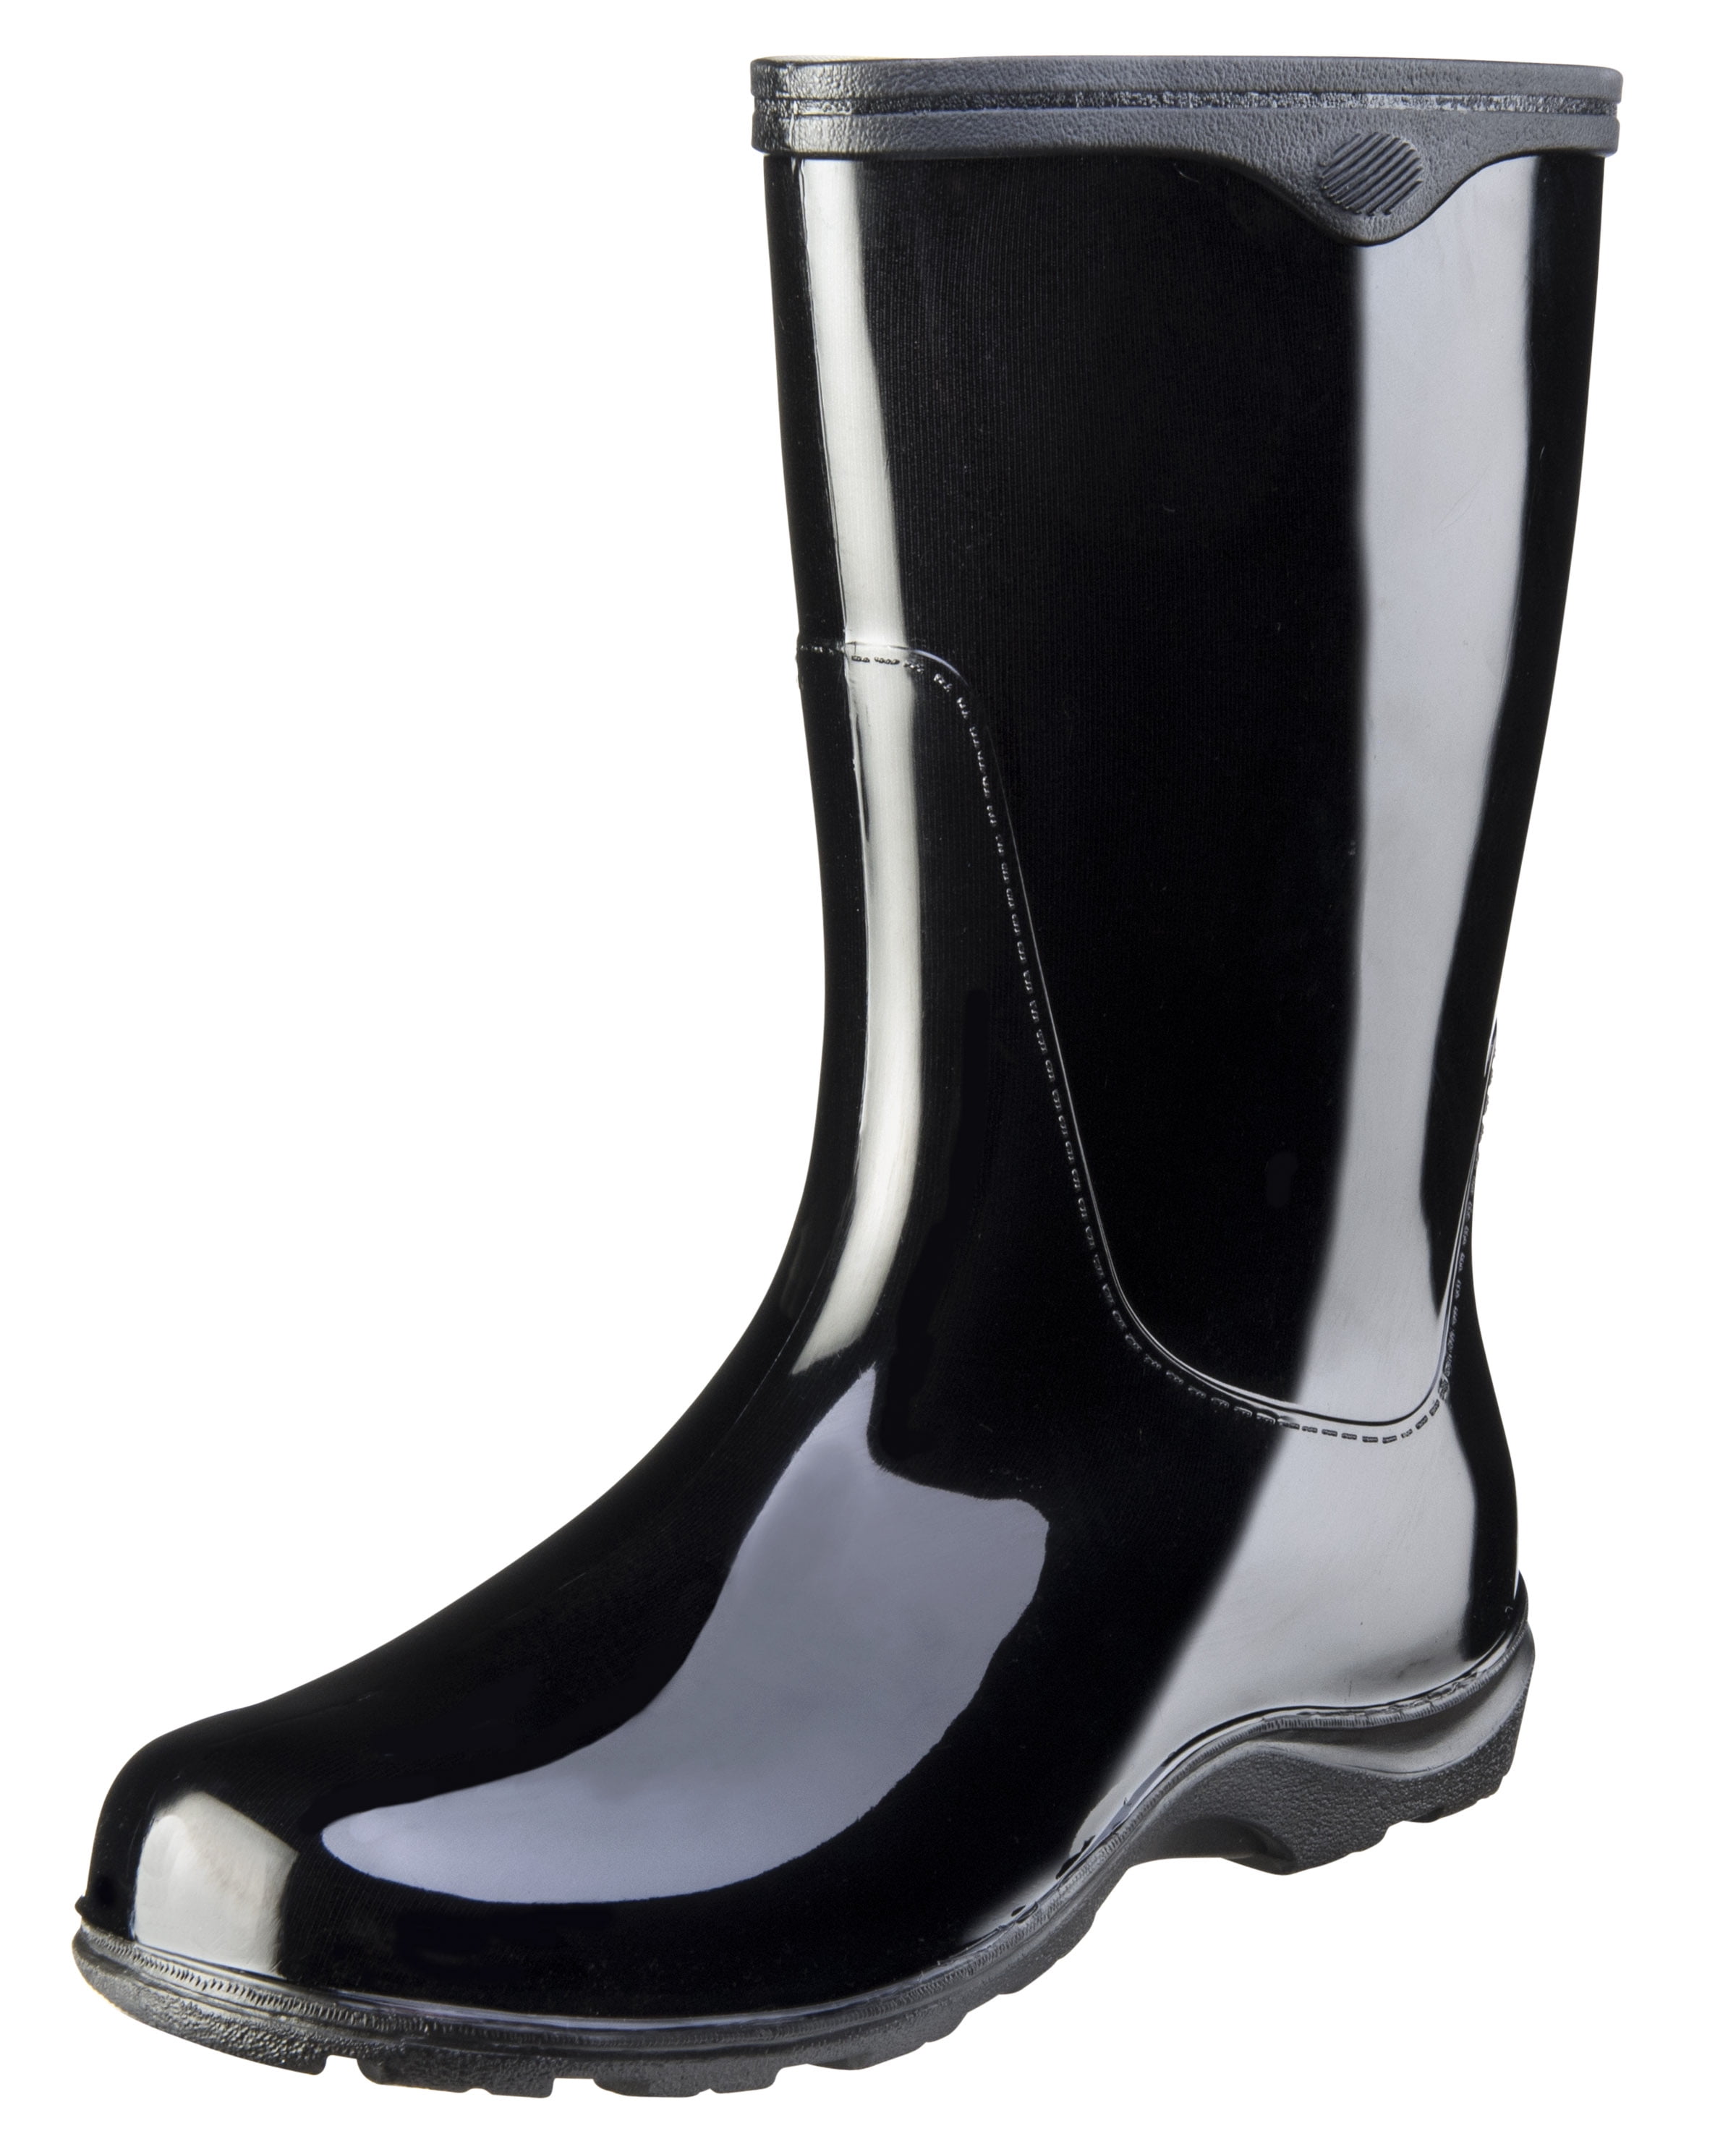 Black Waterproof Rain Boots 